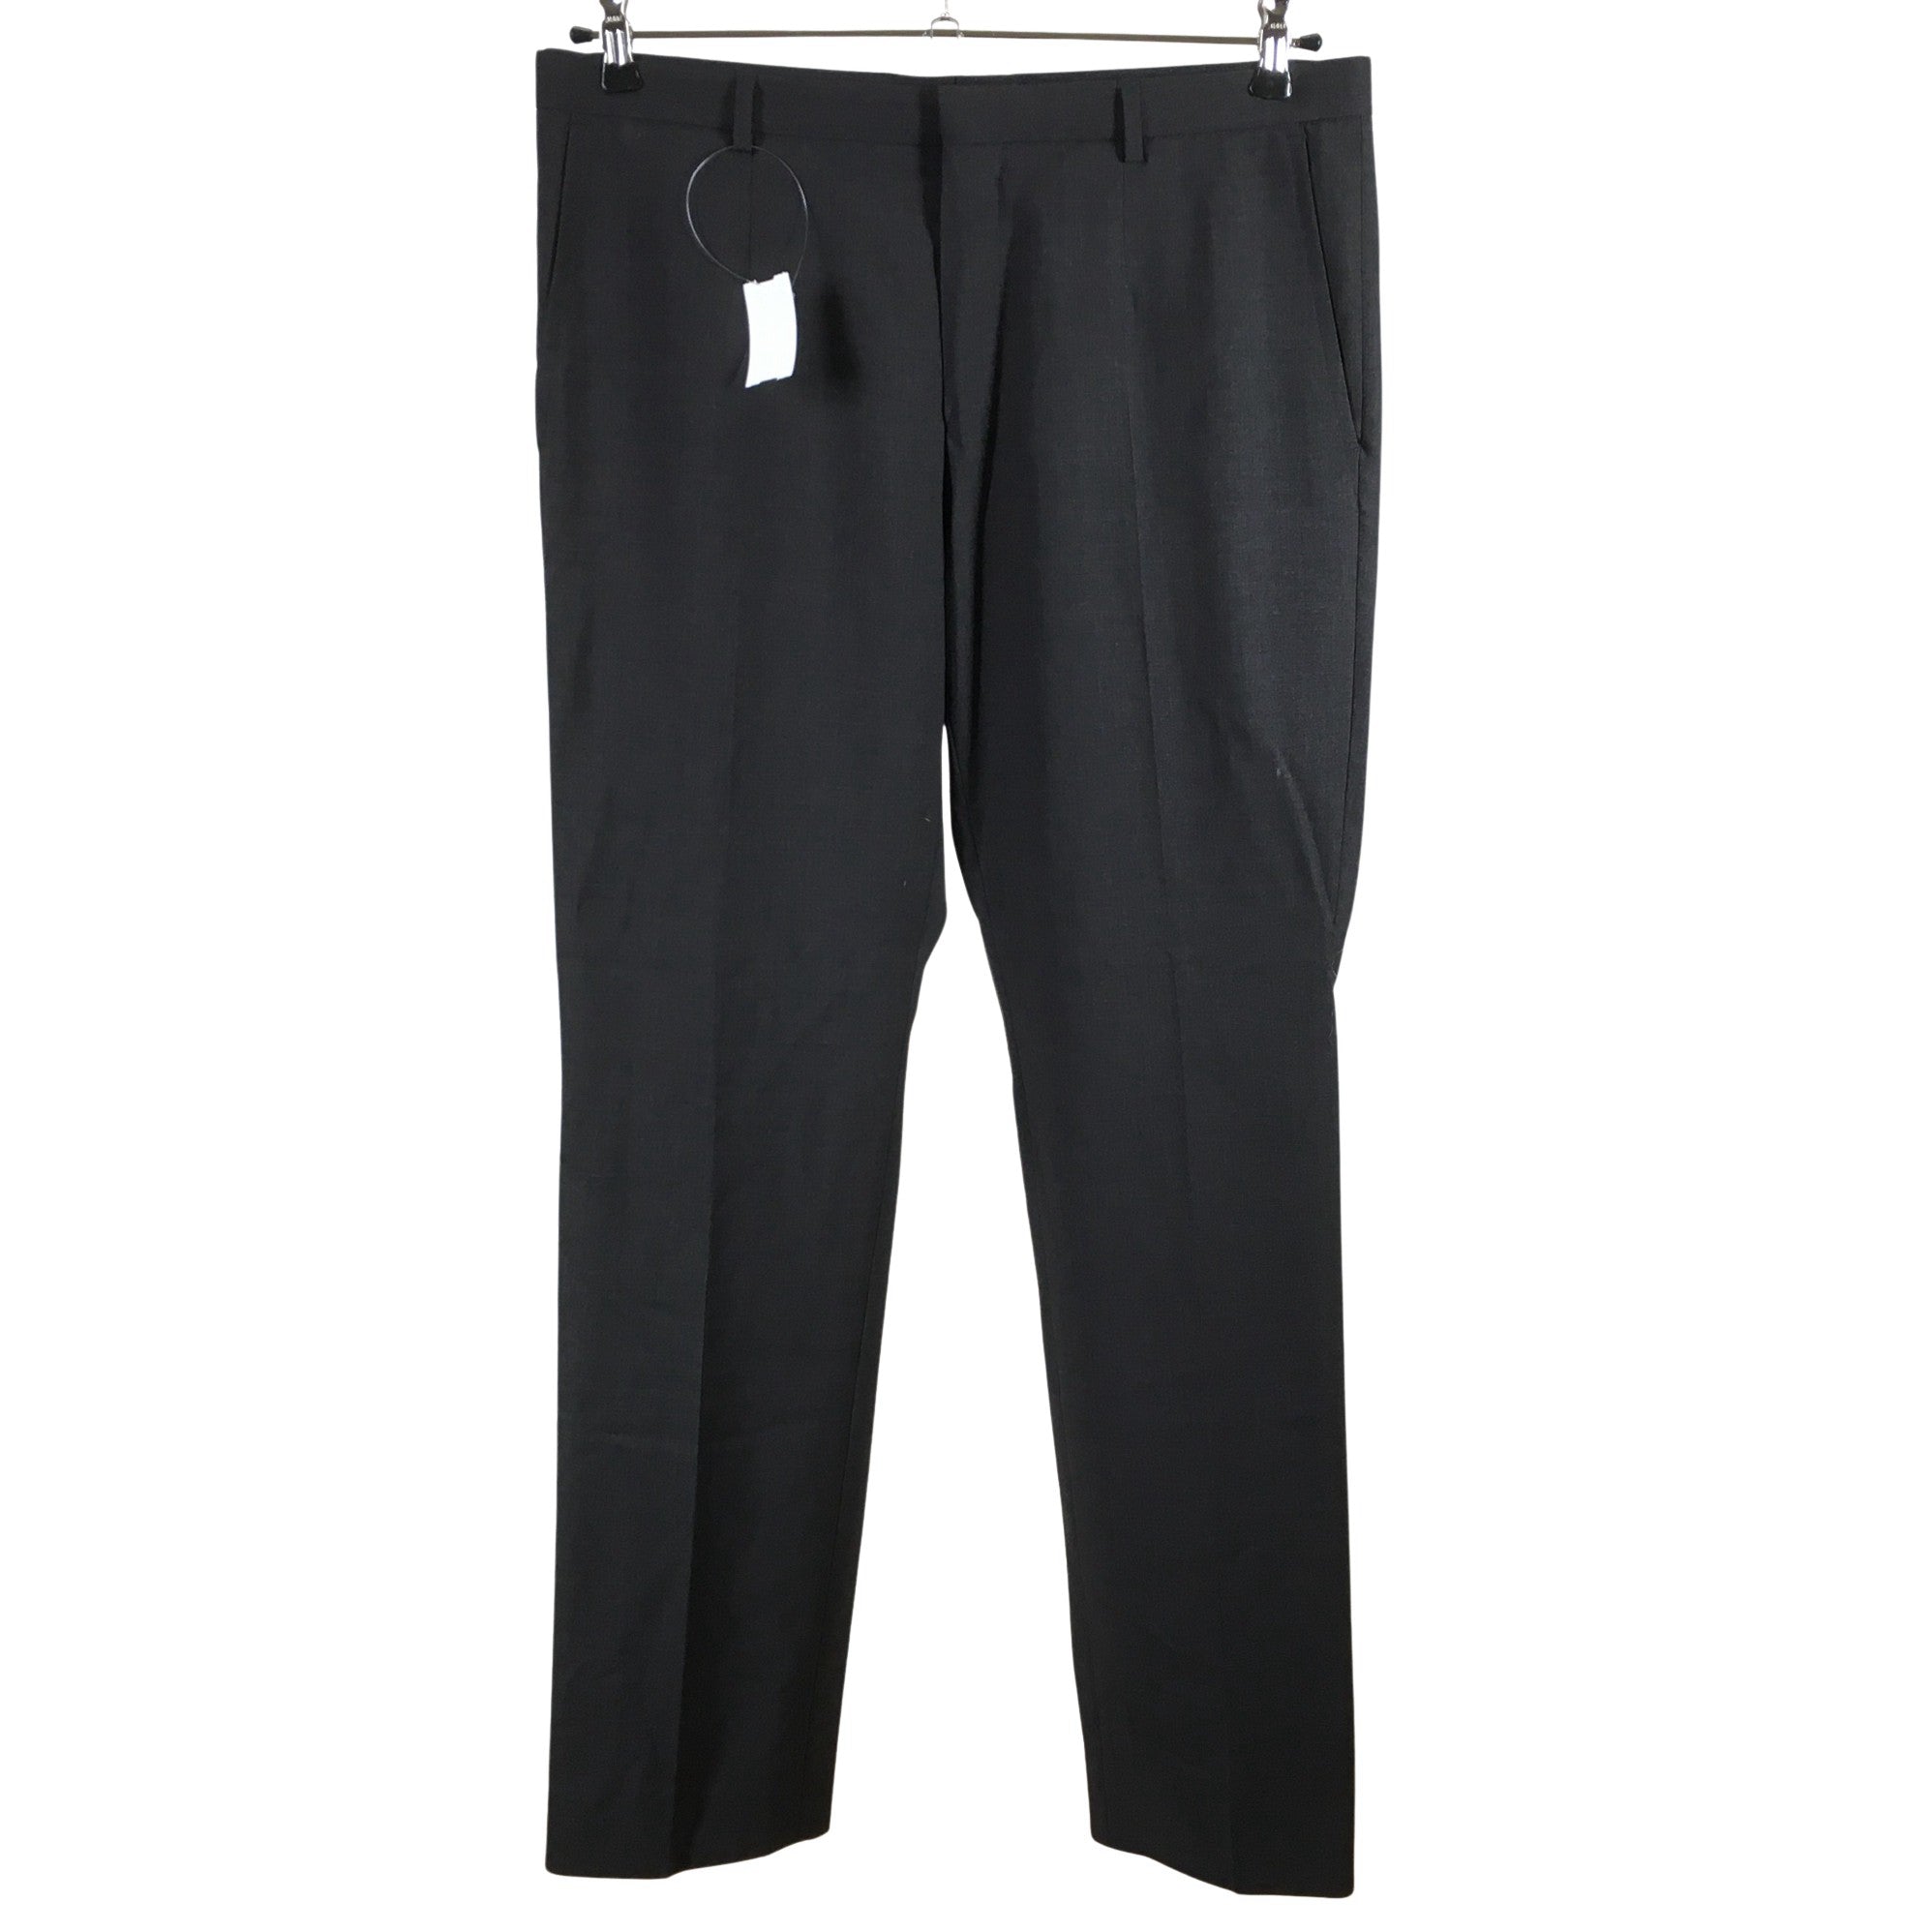 Hugo Boss Men's Plaid Extra Slim Fit Suit Pants | eBay